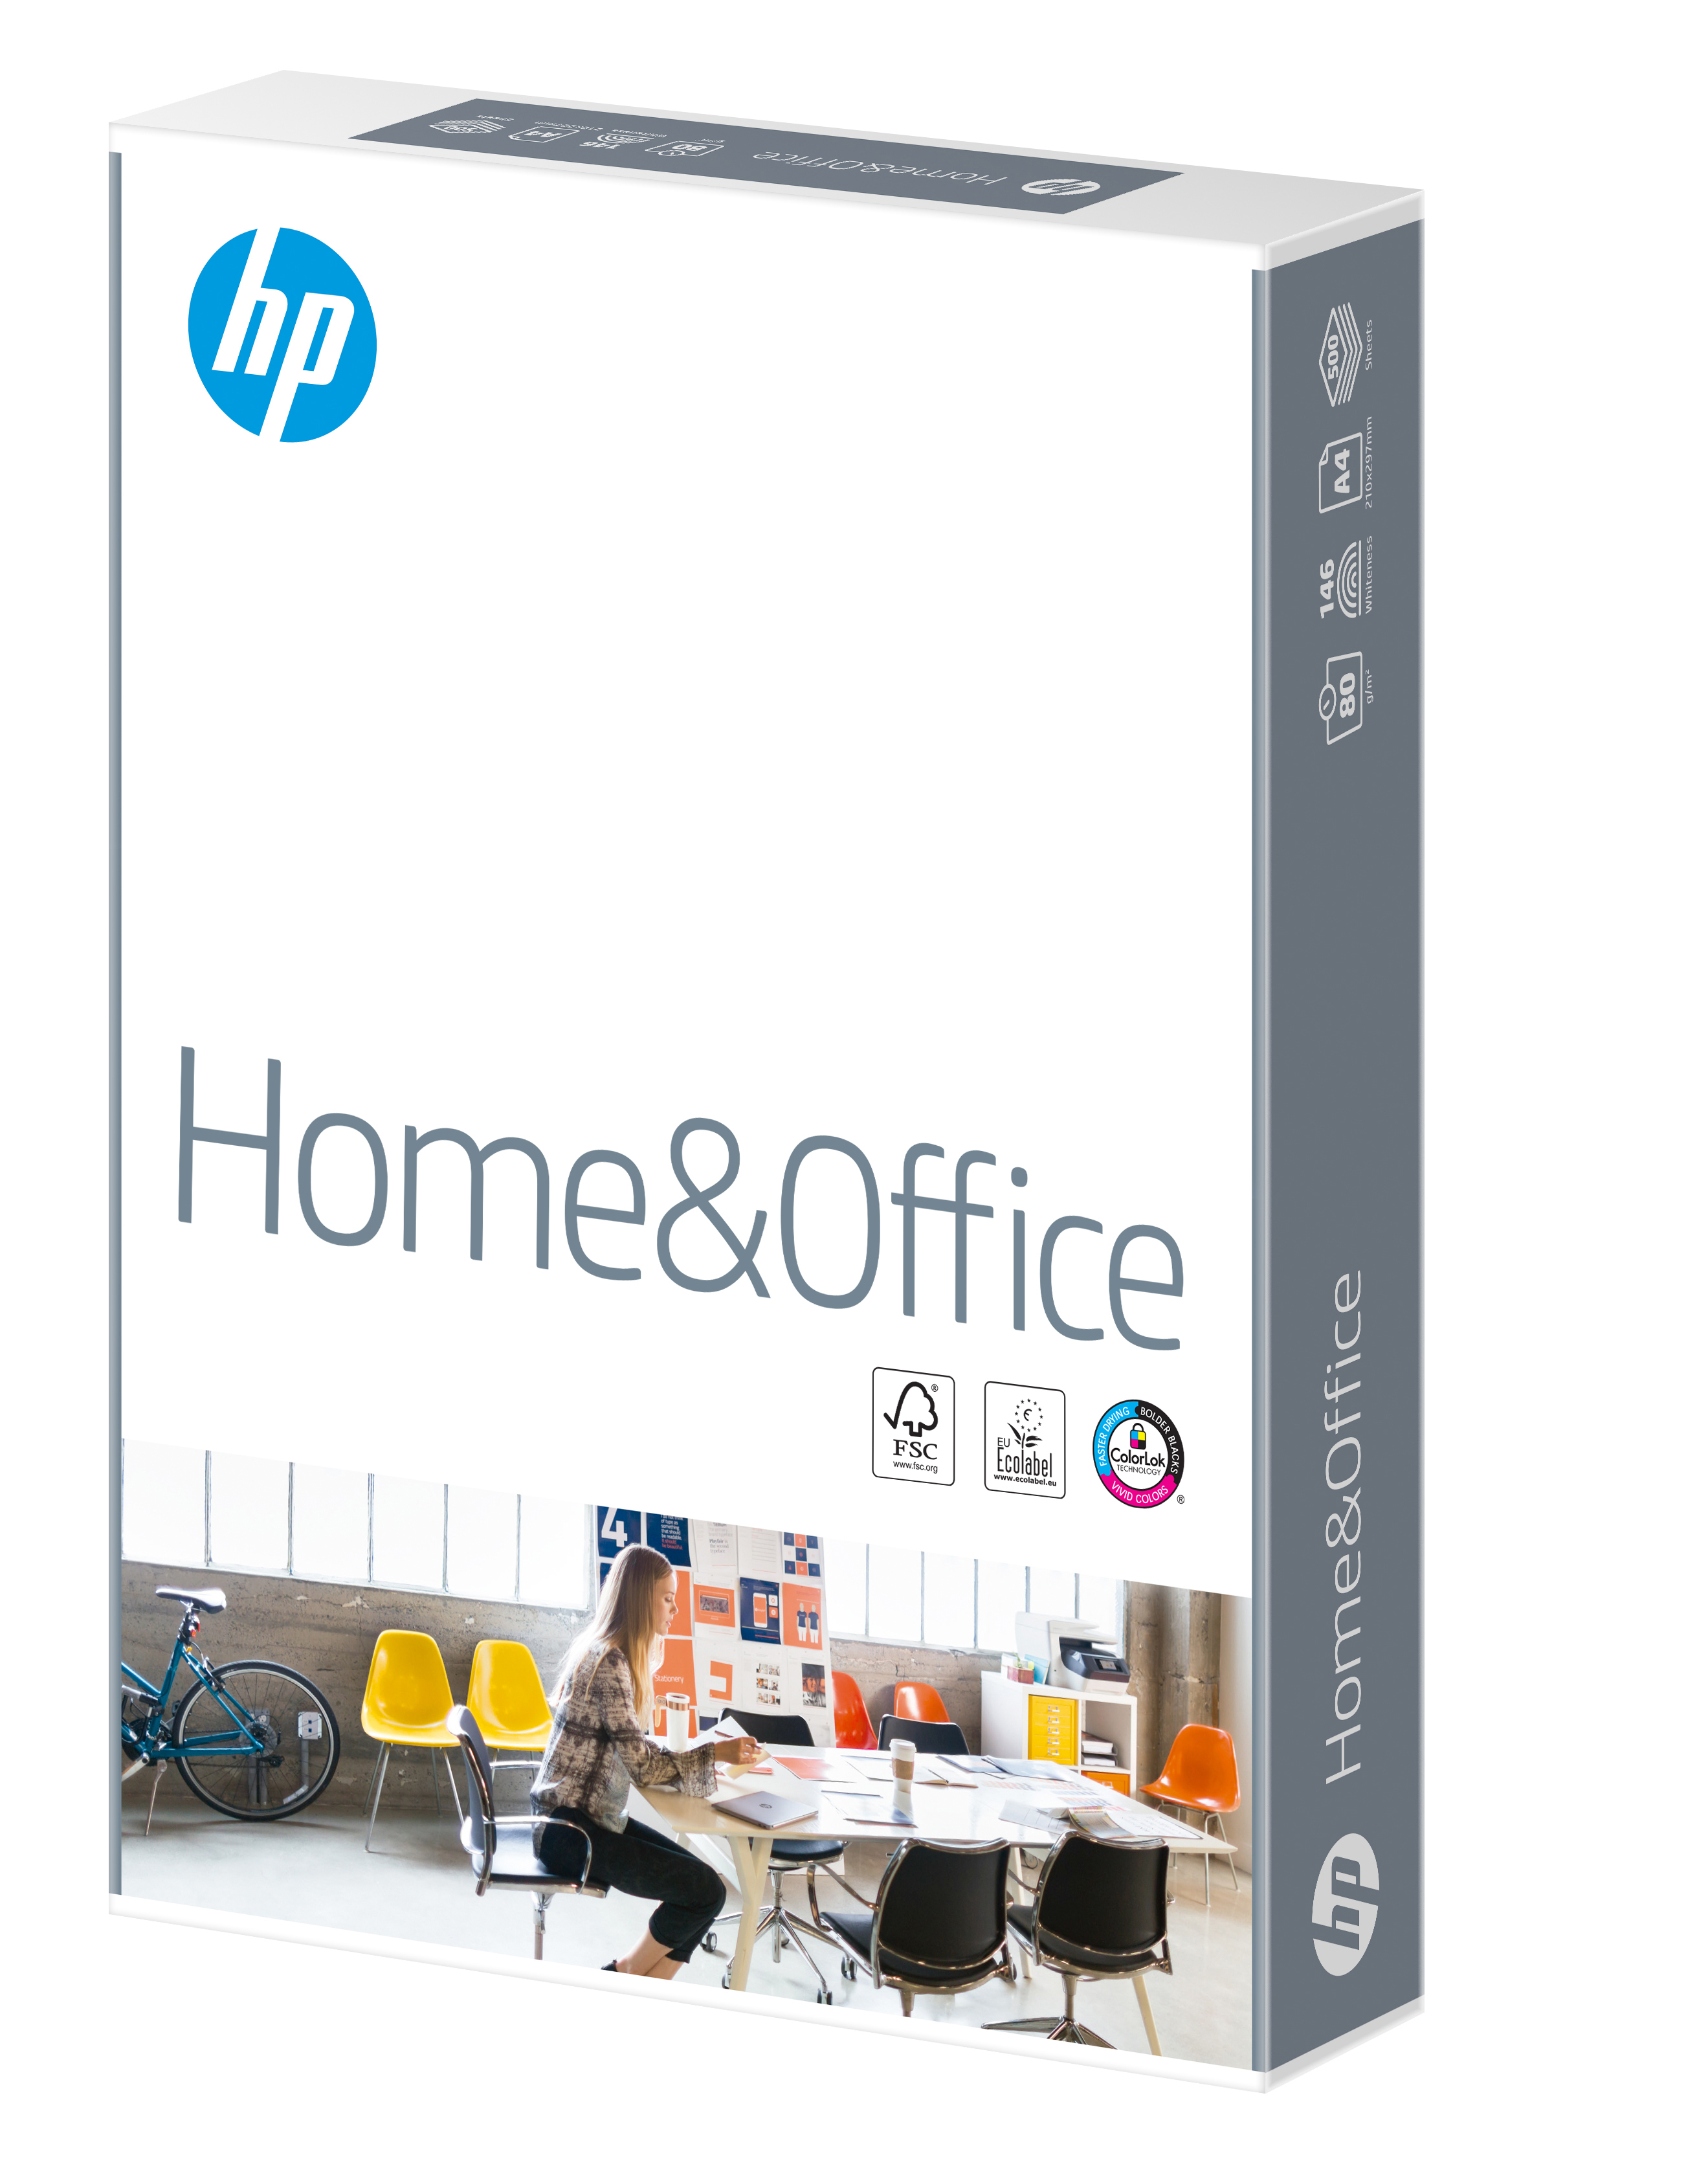 Bancale carta per fotocopie HP Home&Office A4 - 80 gr.